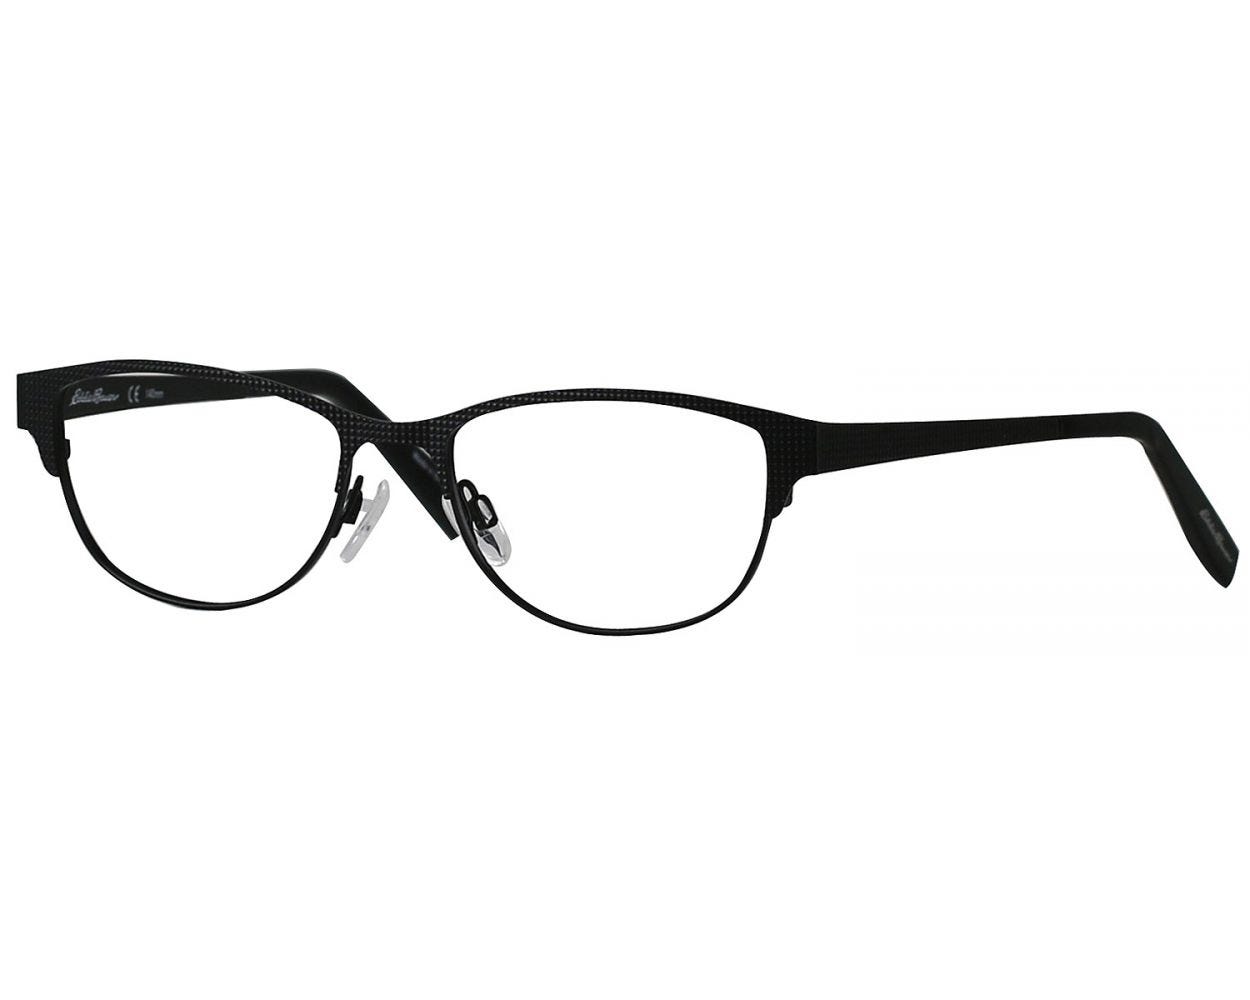 Eddie Bauer Eyeglasses 144225-c